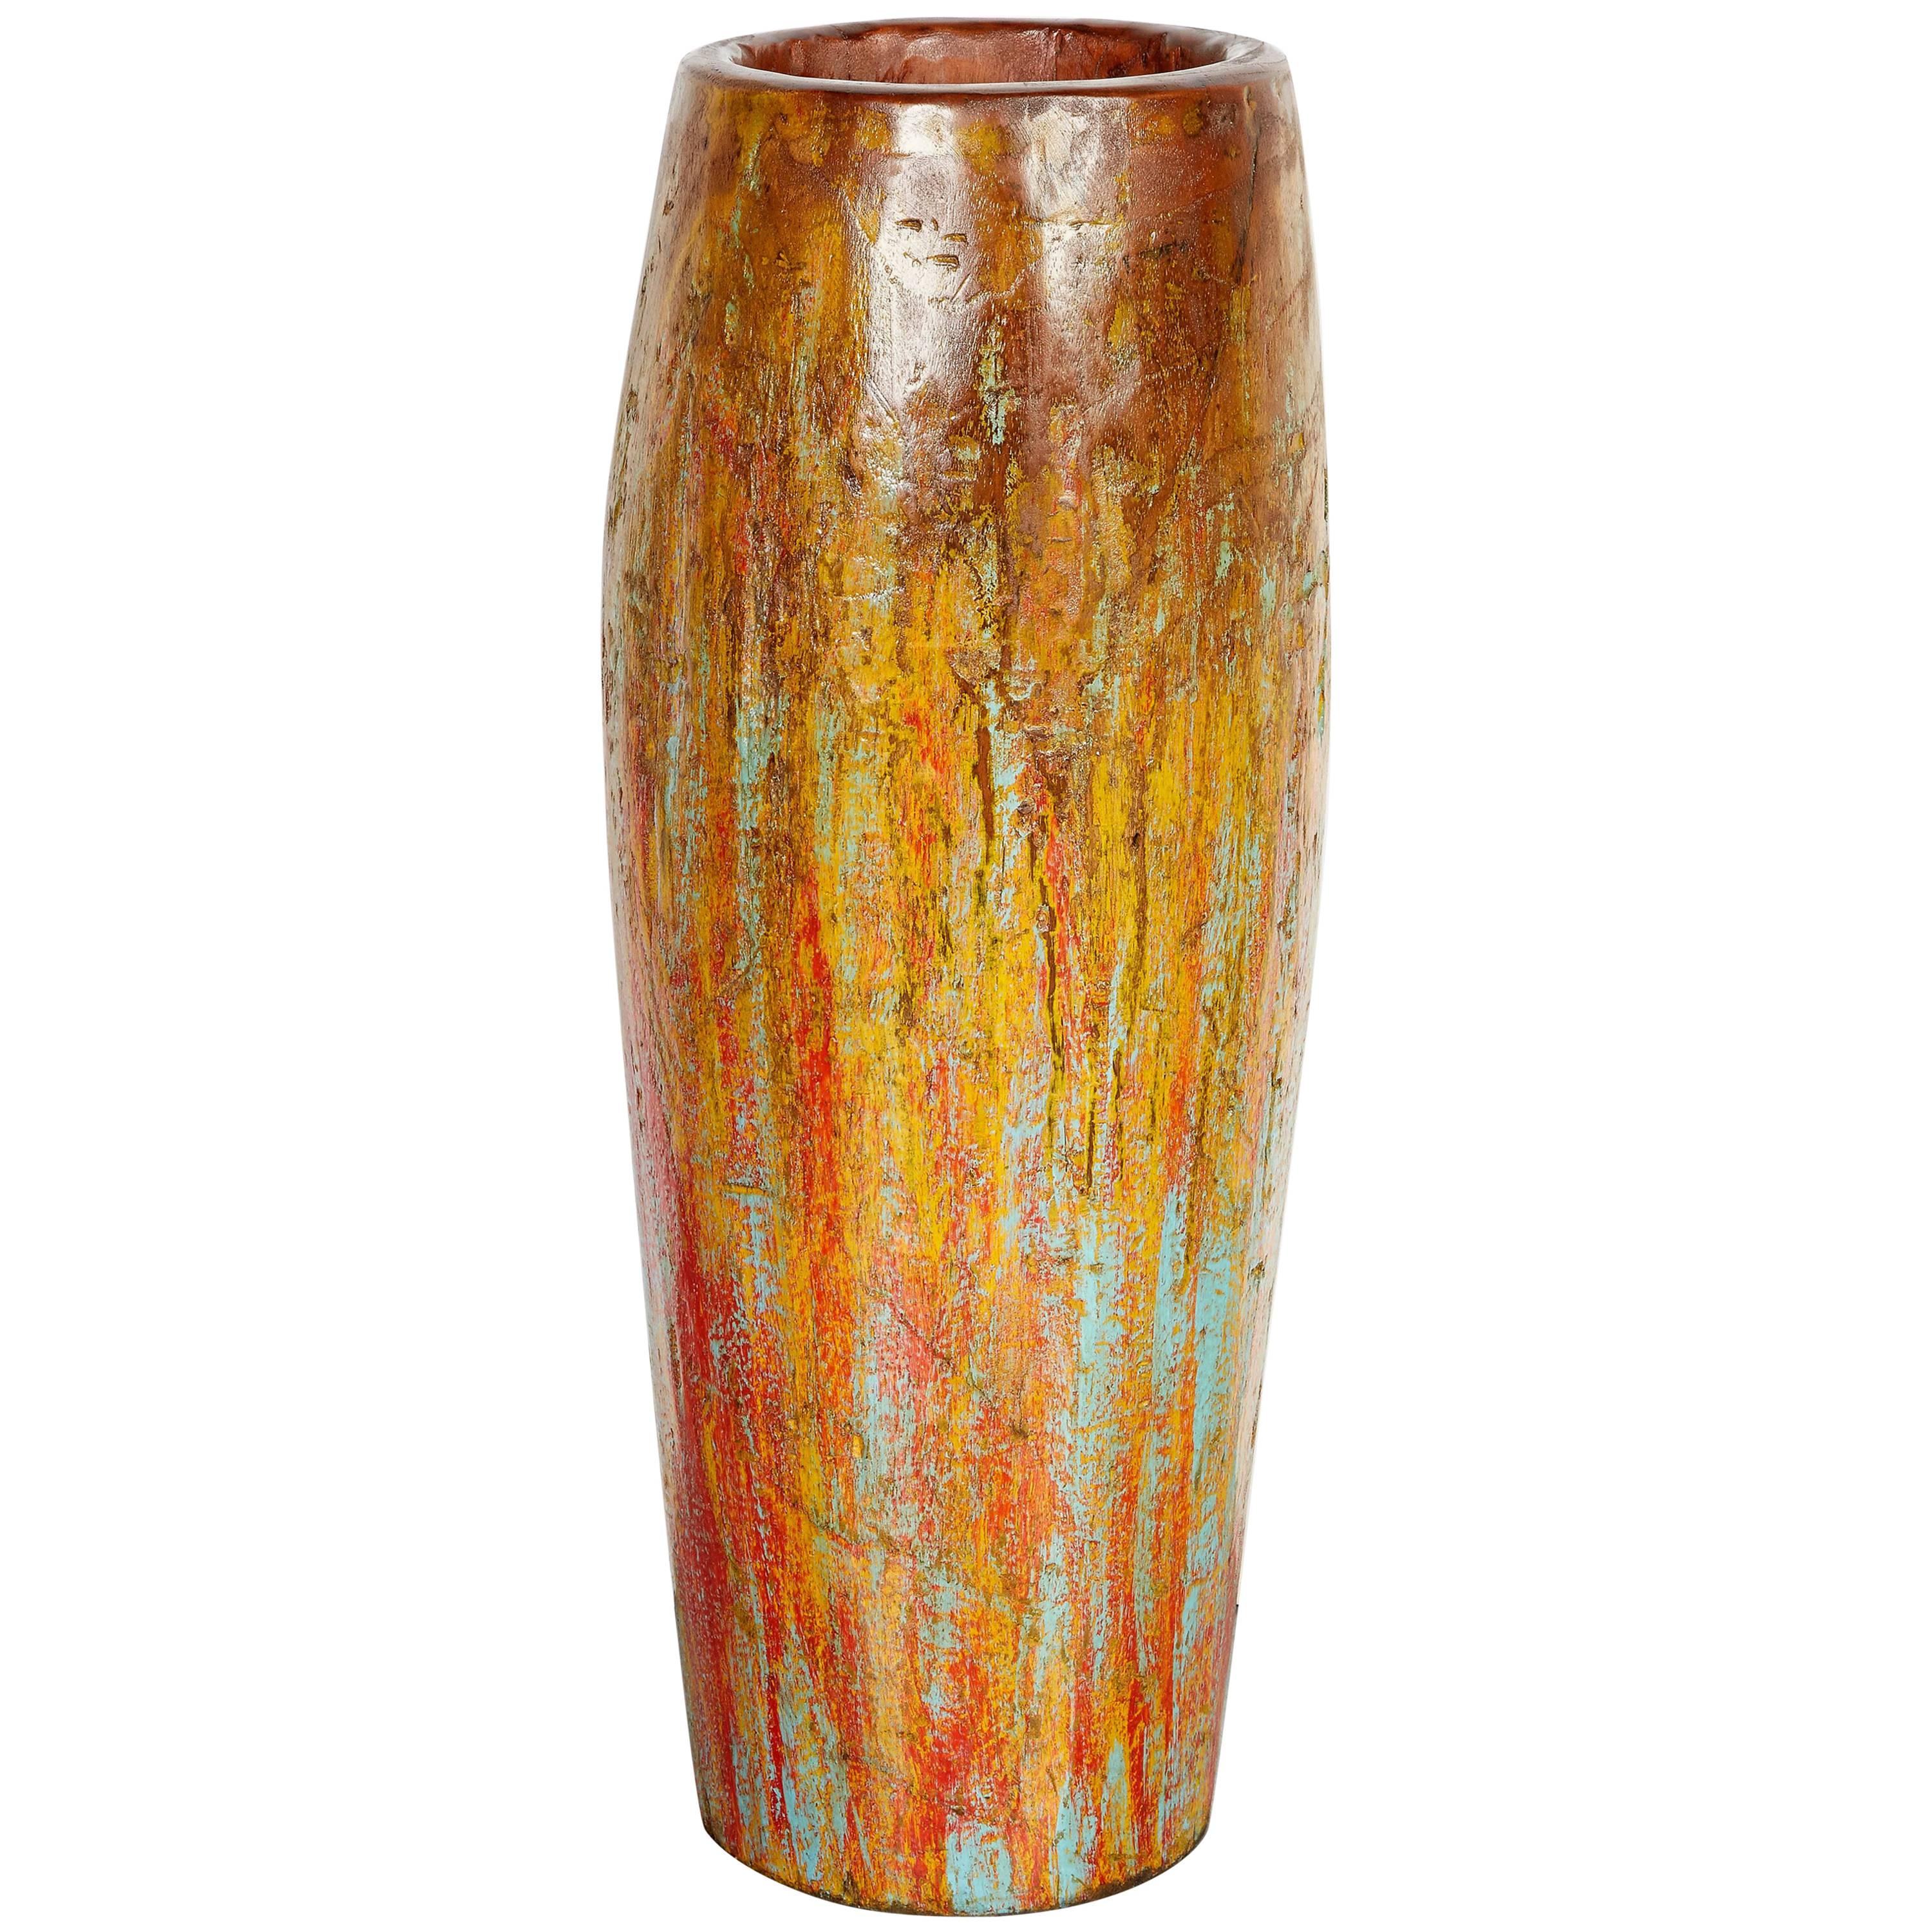 Tall, Colorful Teak Drum Vase from Java